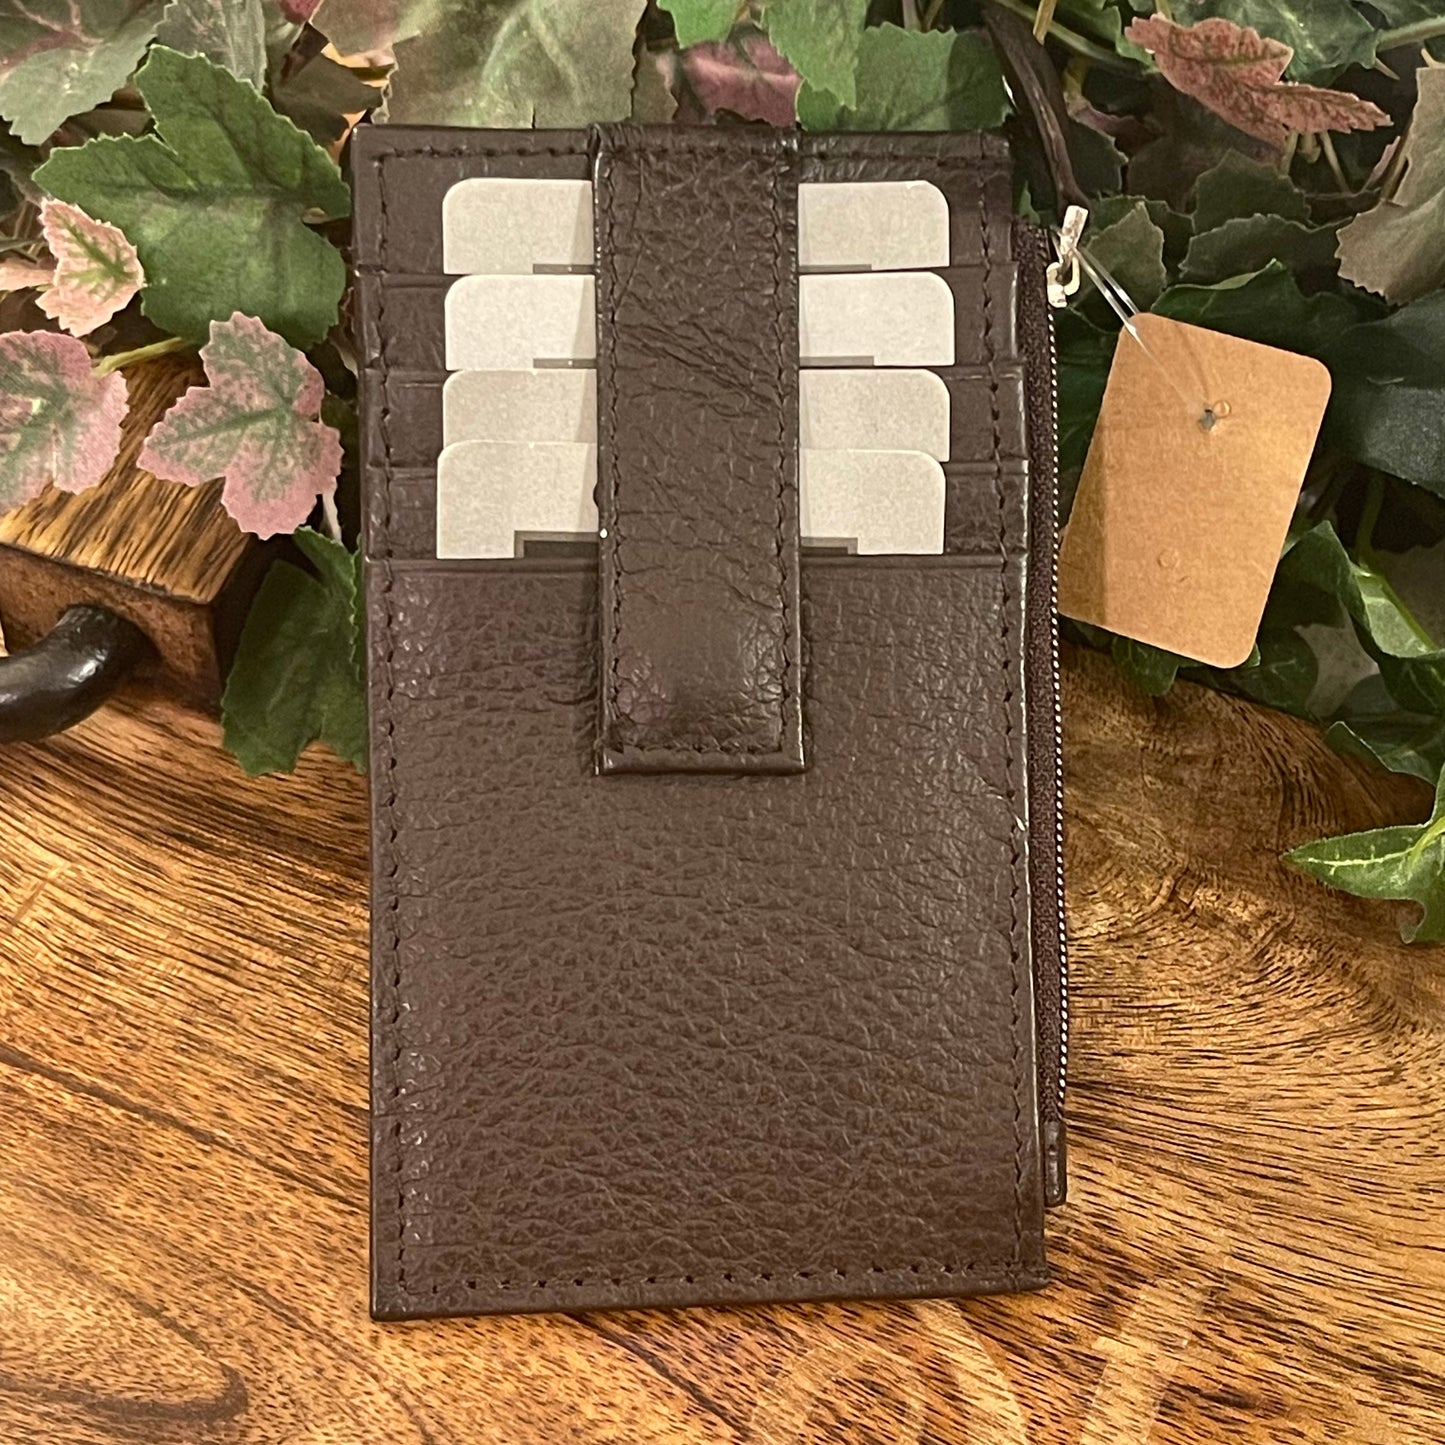 Genuine Leather Dark Brown Cardholder Wallet